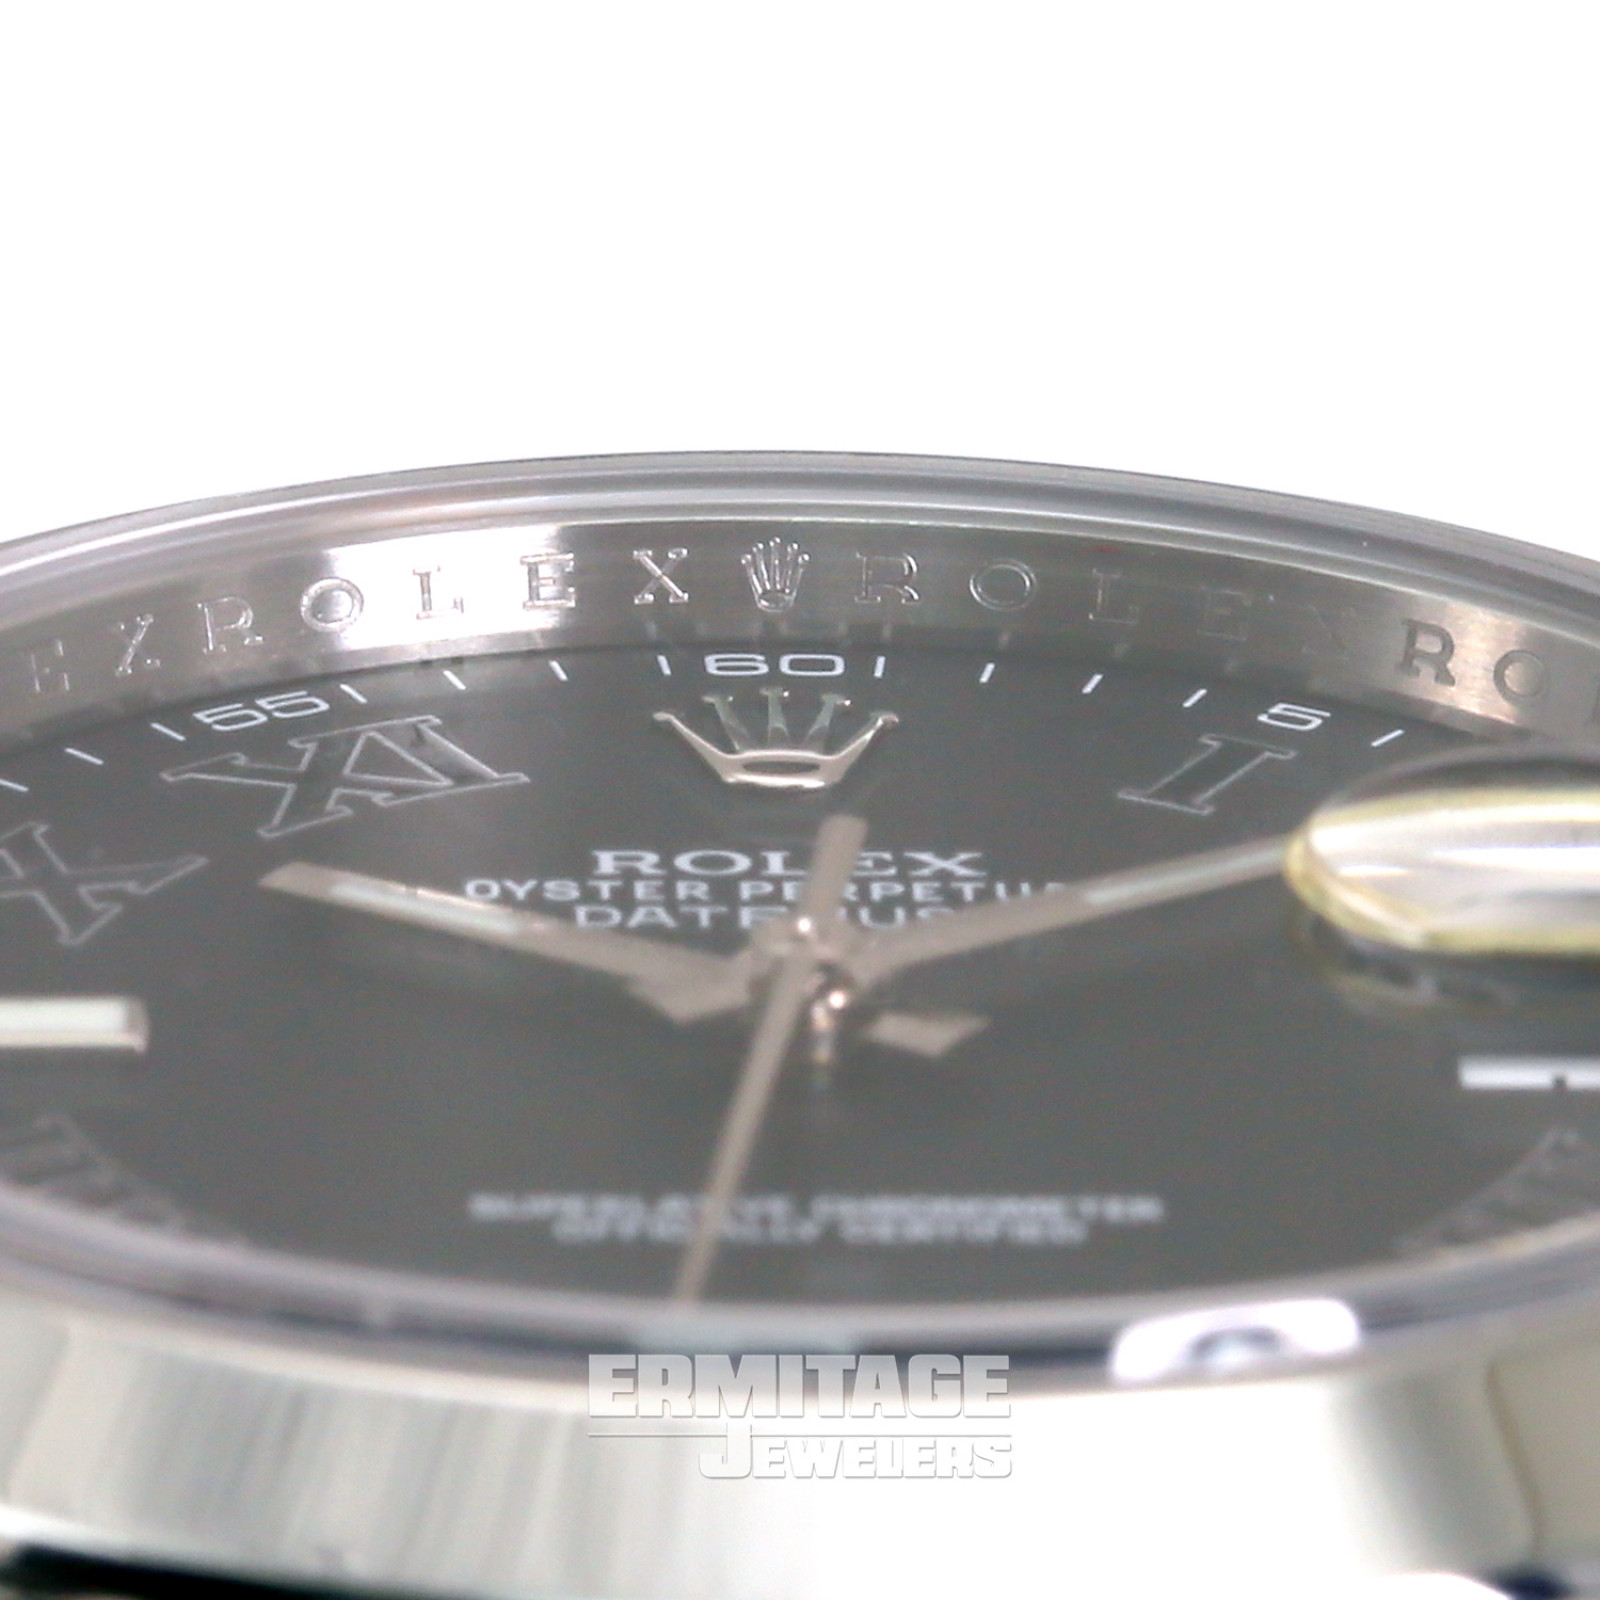 Stainless Steel Rolex Datejust 116300 41 mm